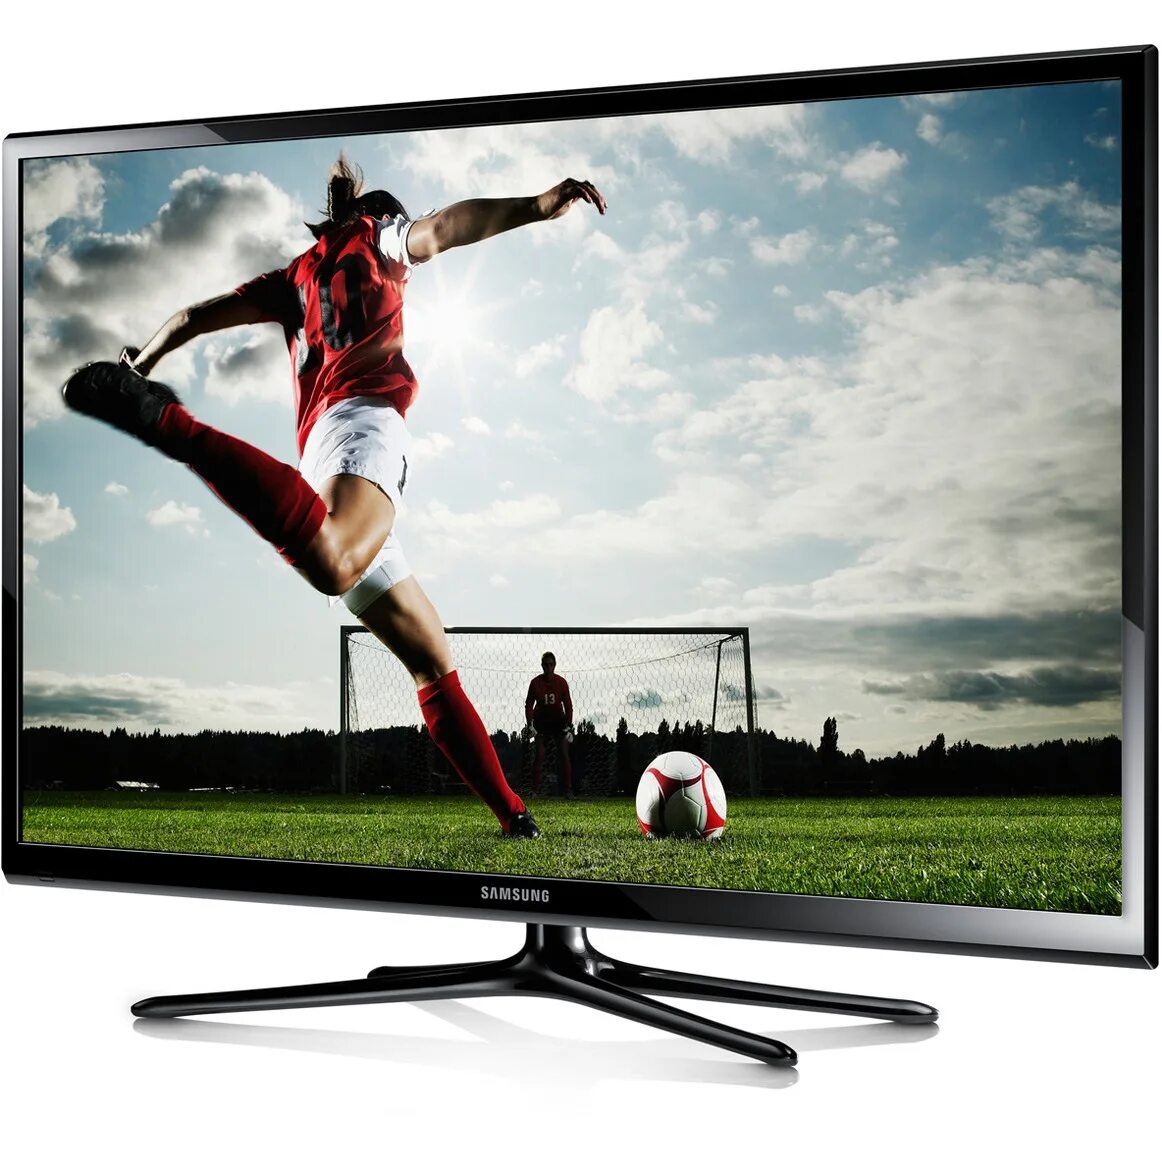 Samsung ps5. Телевизор Samsung ps43e450 43". Телевизор Samsung ps51e8000 51". Samsung f5000 телевизор. Плазма самсунг 50 дюймов.